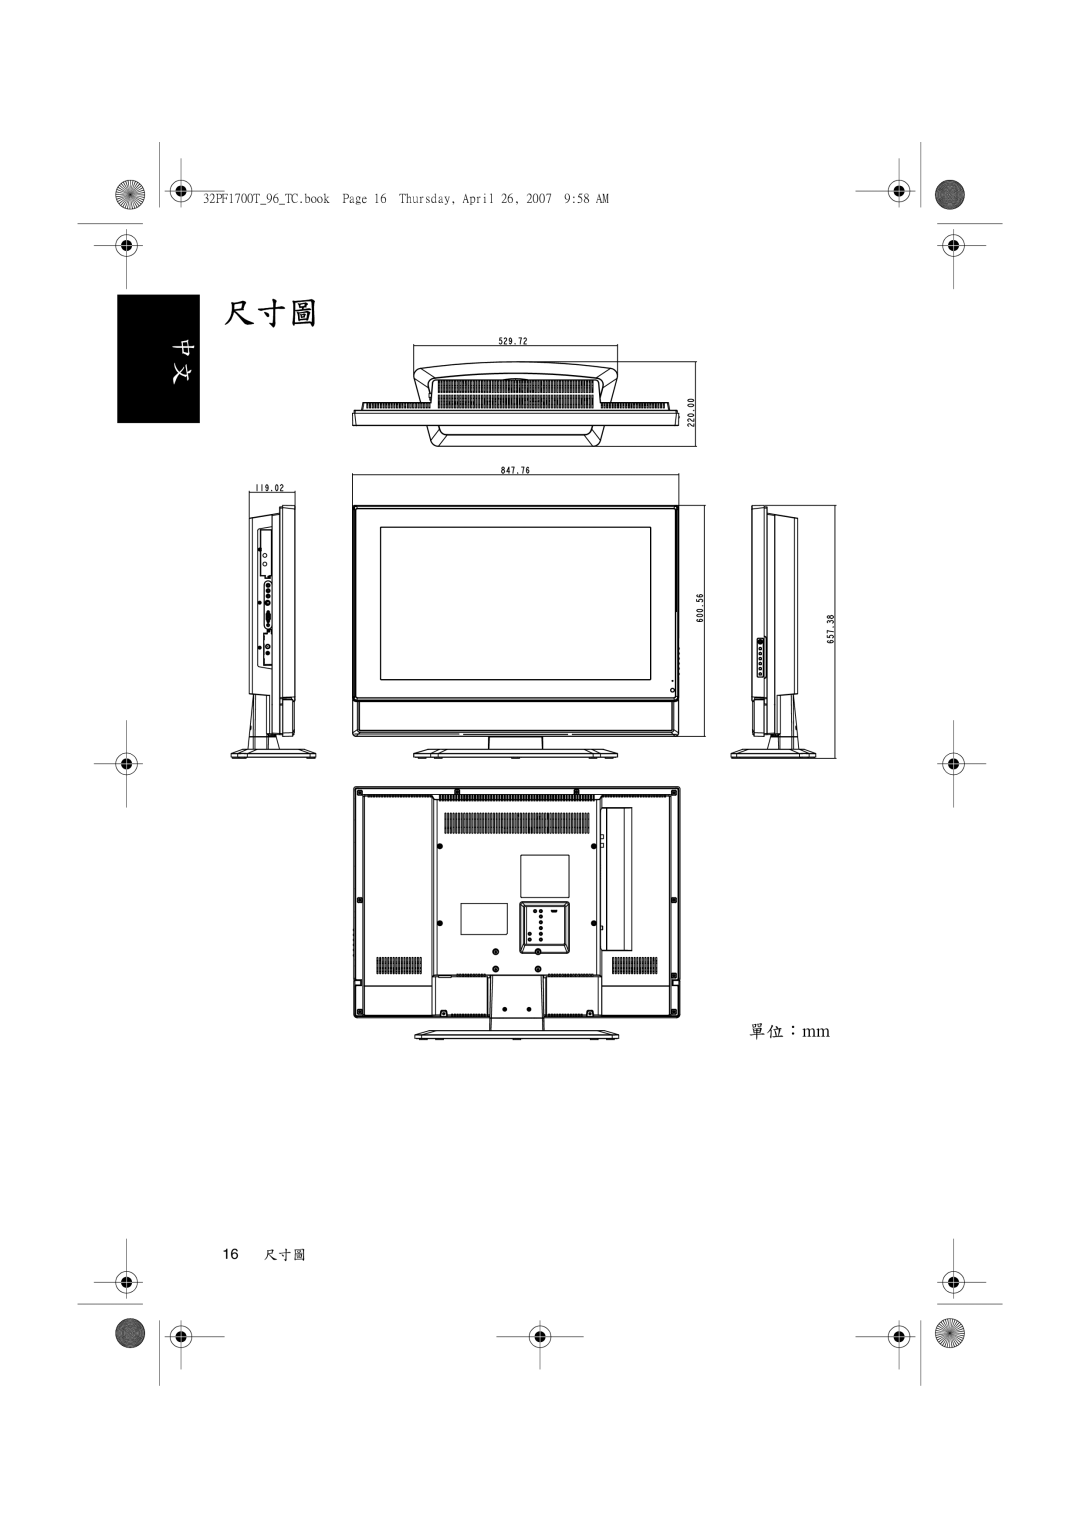 Philips 32PF1700T/96 manual 尺寸圖 